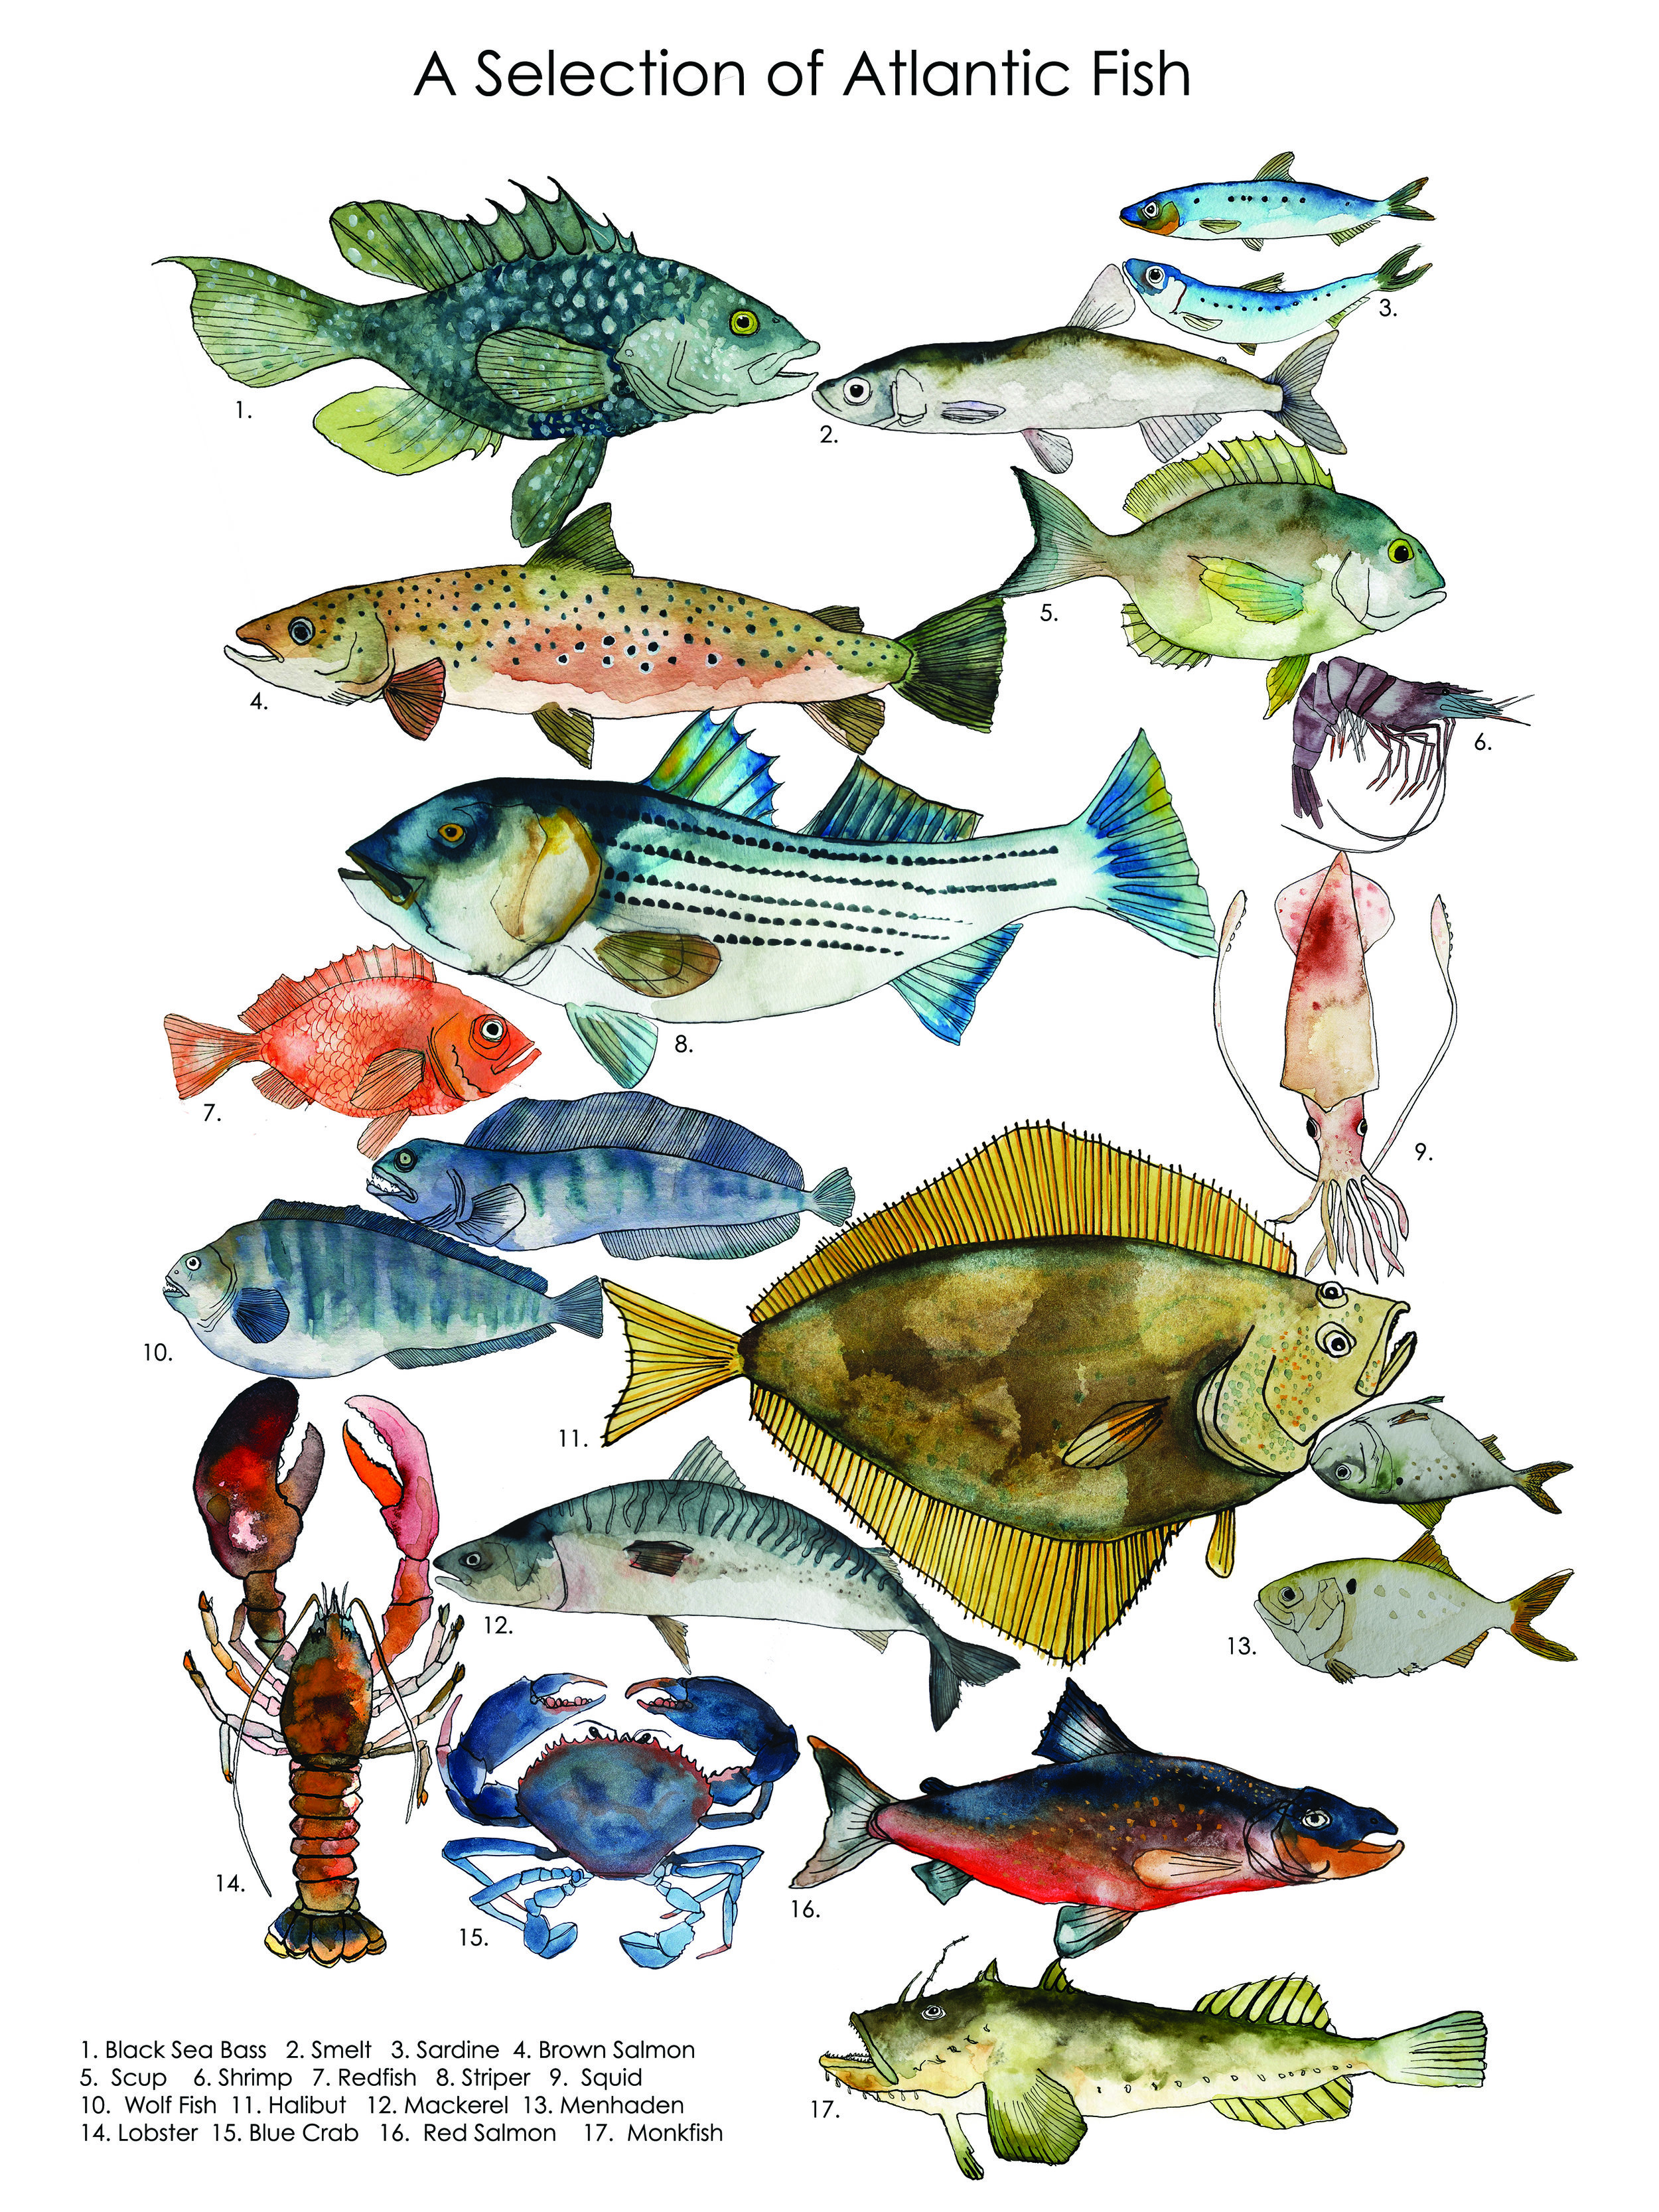 Fish Chart